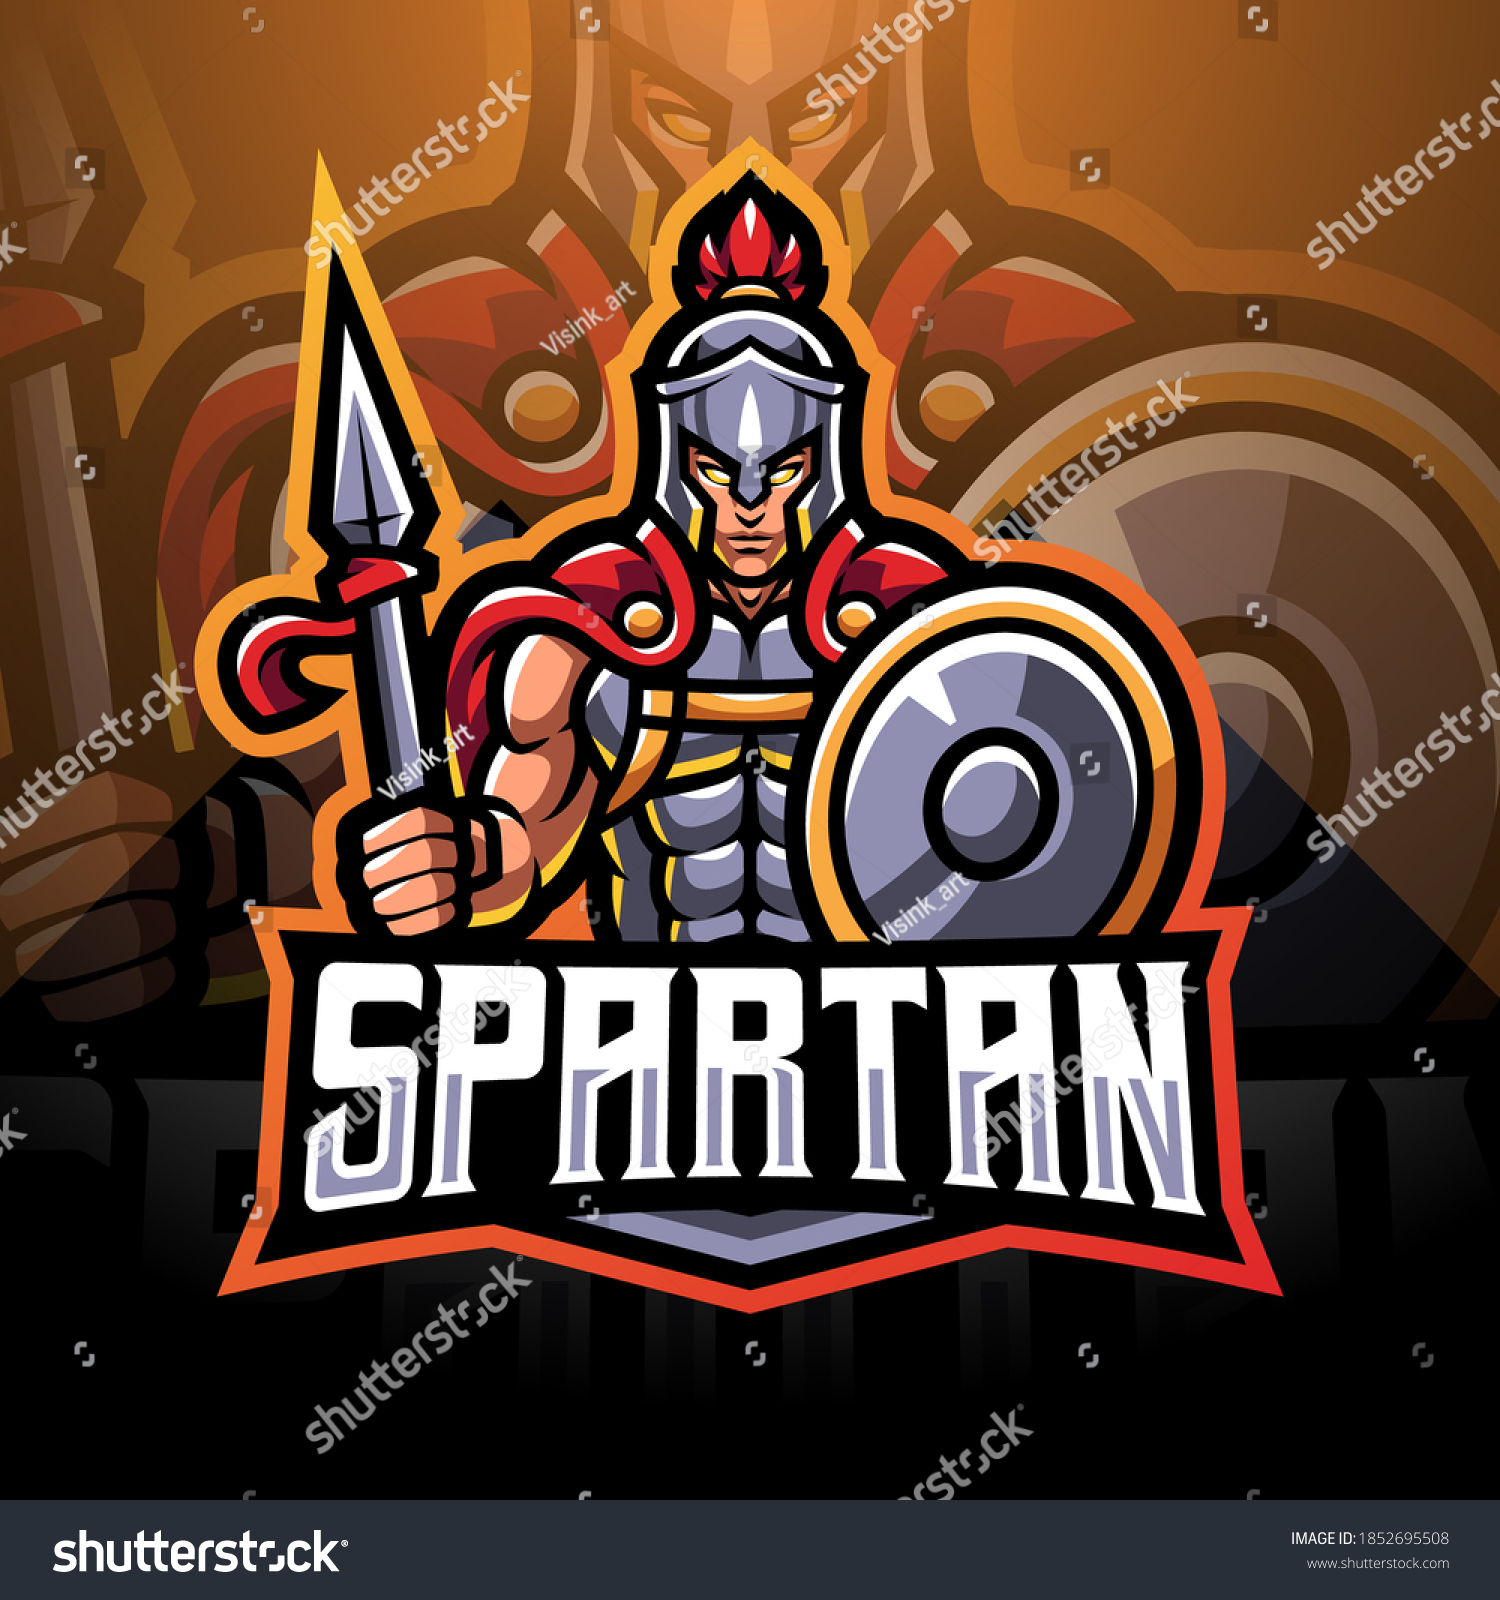 5,651 Spartan Character Images, Stock Photos & Vectors | Shutterstock